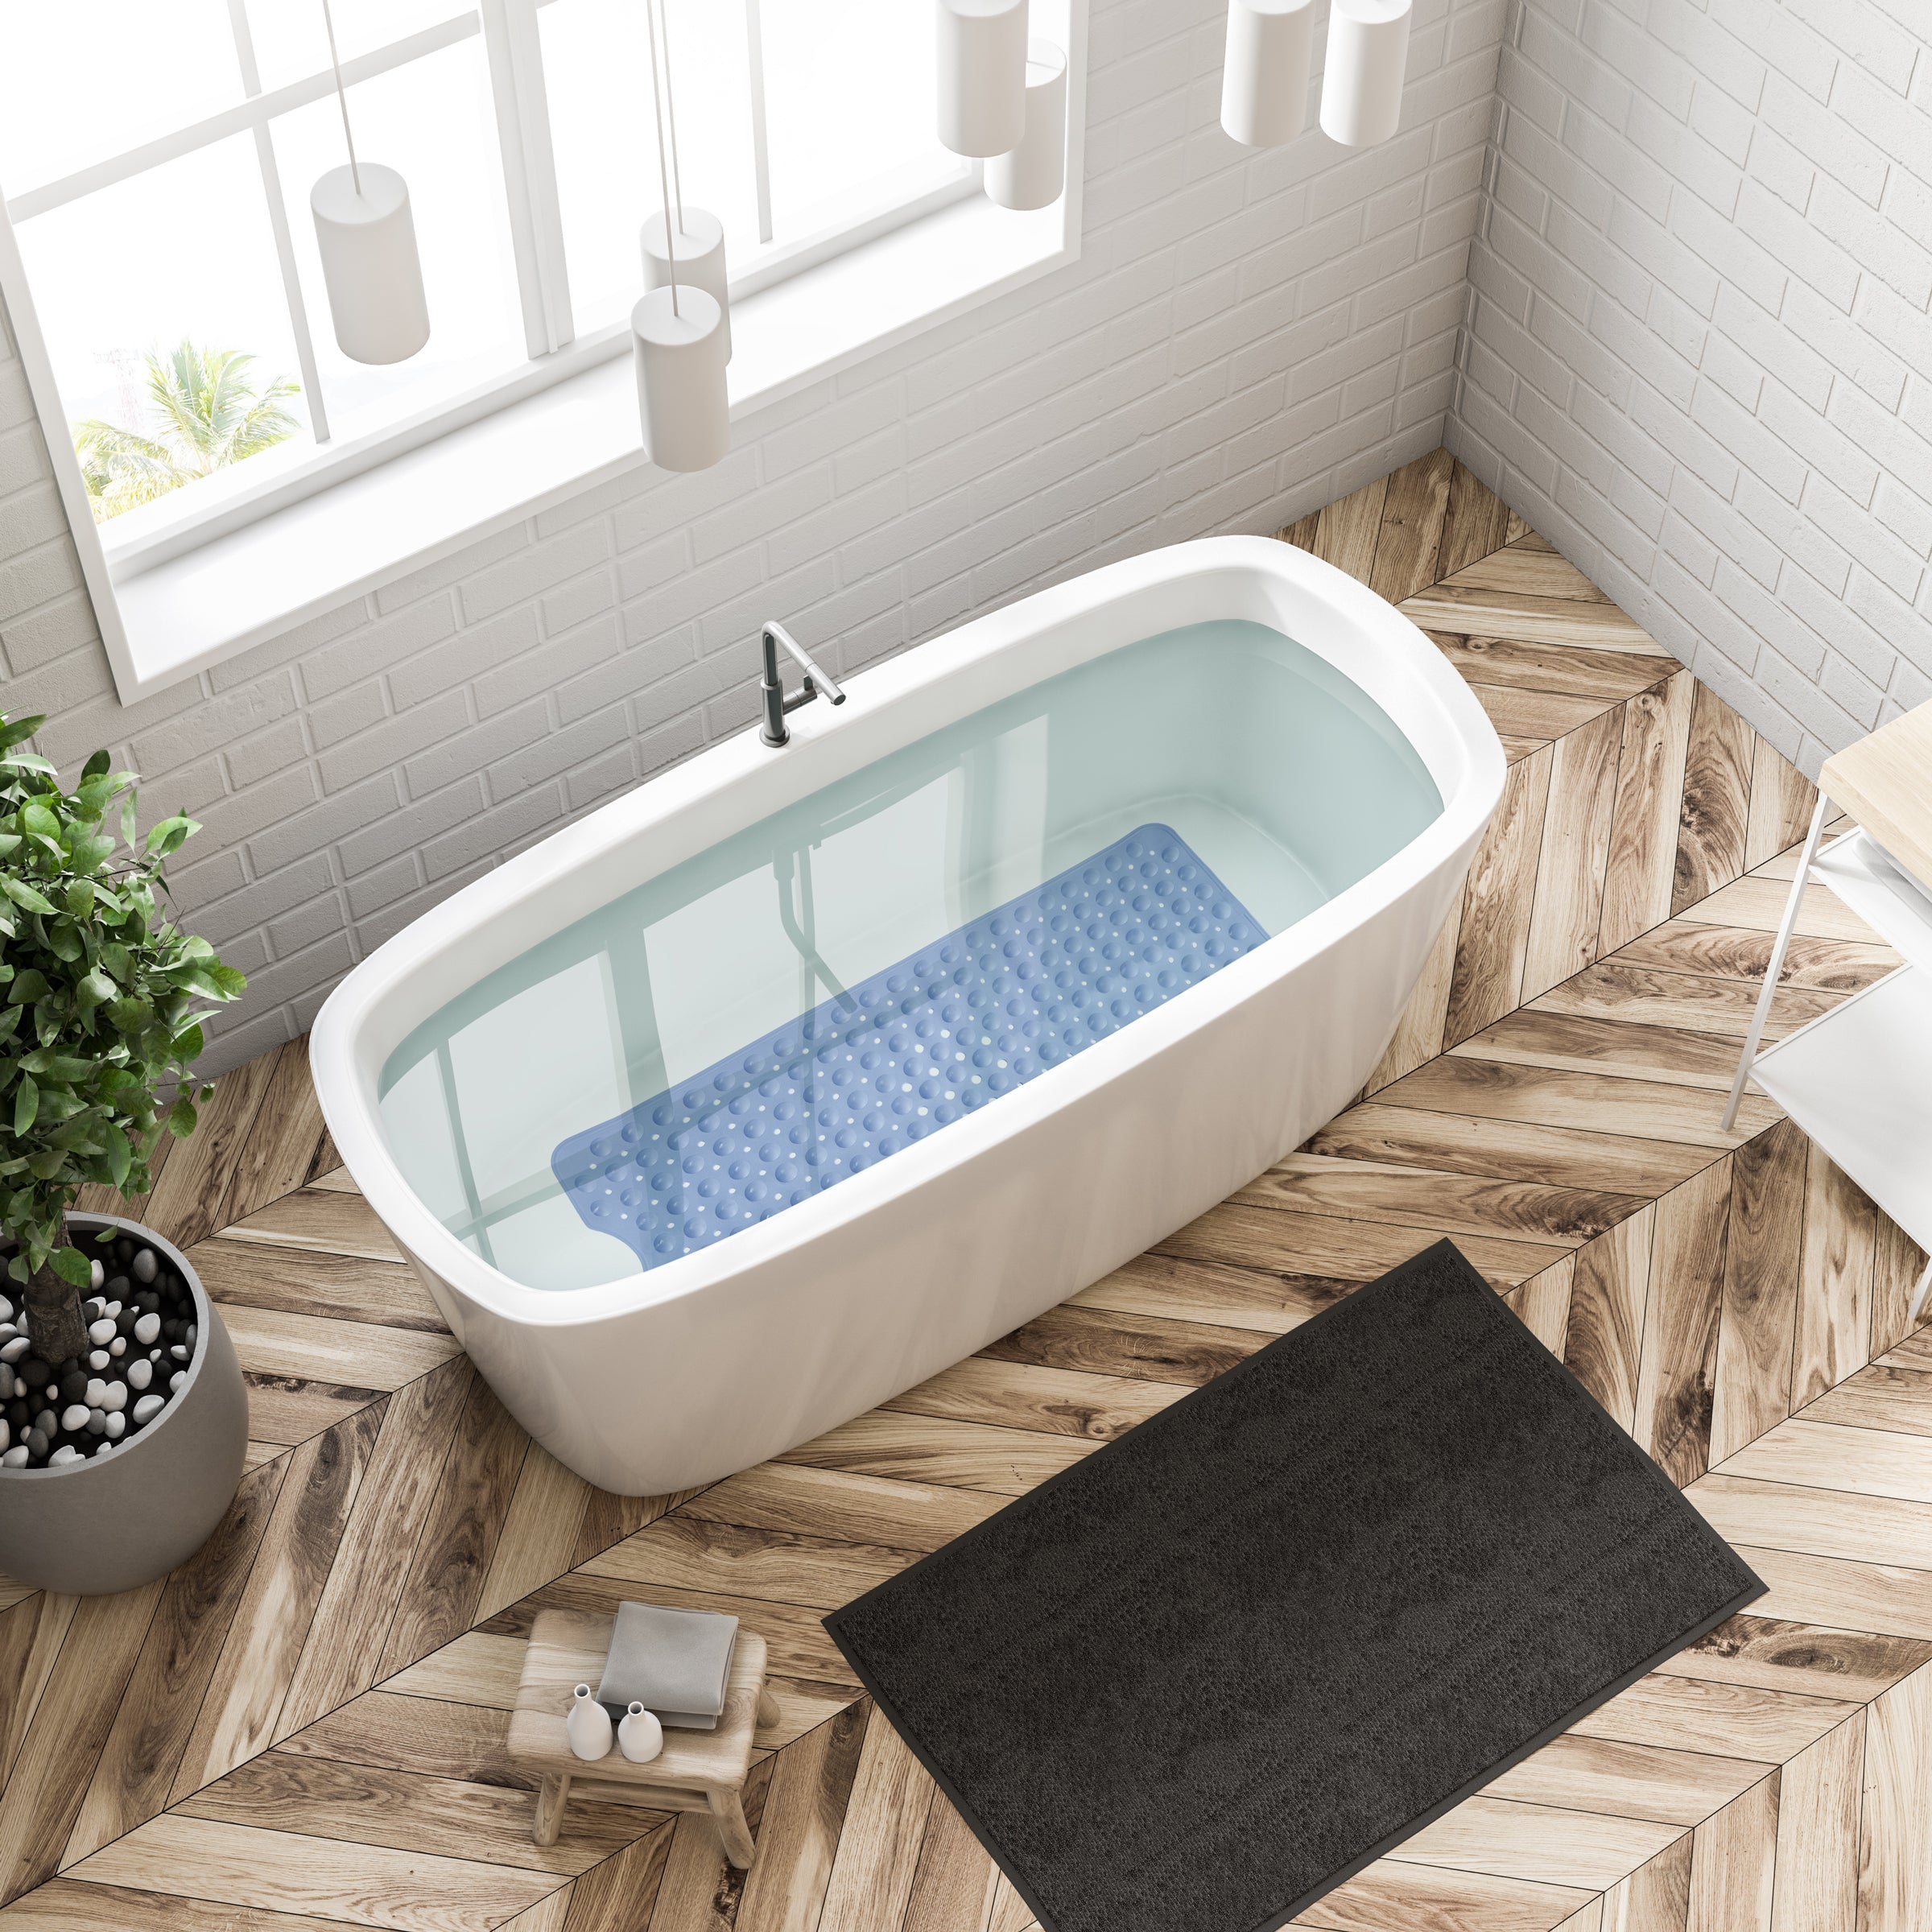 Xyyrys Secure Mat - The Ultimate Non-Slip Bath Mat,Non-Slip Bathtub Mat,The Secure Mat Bath Mat,for Tub,Shower,Bathroom (Beige,40x60cm), 055